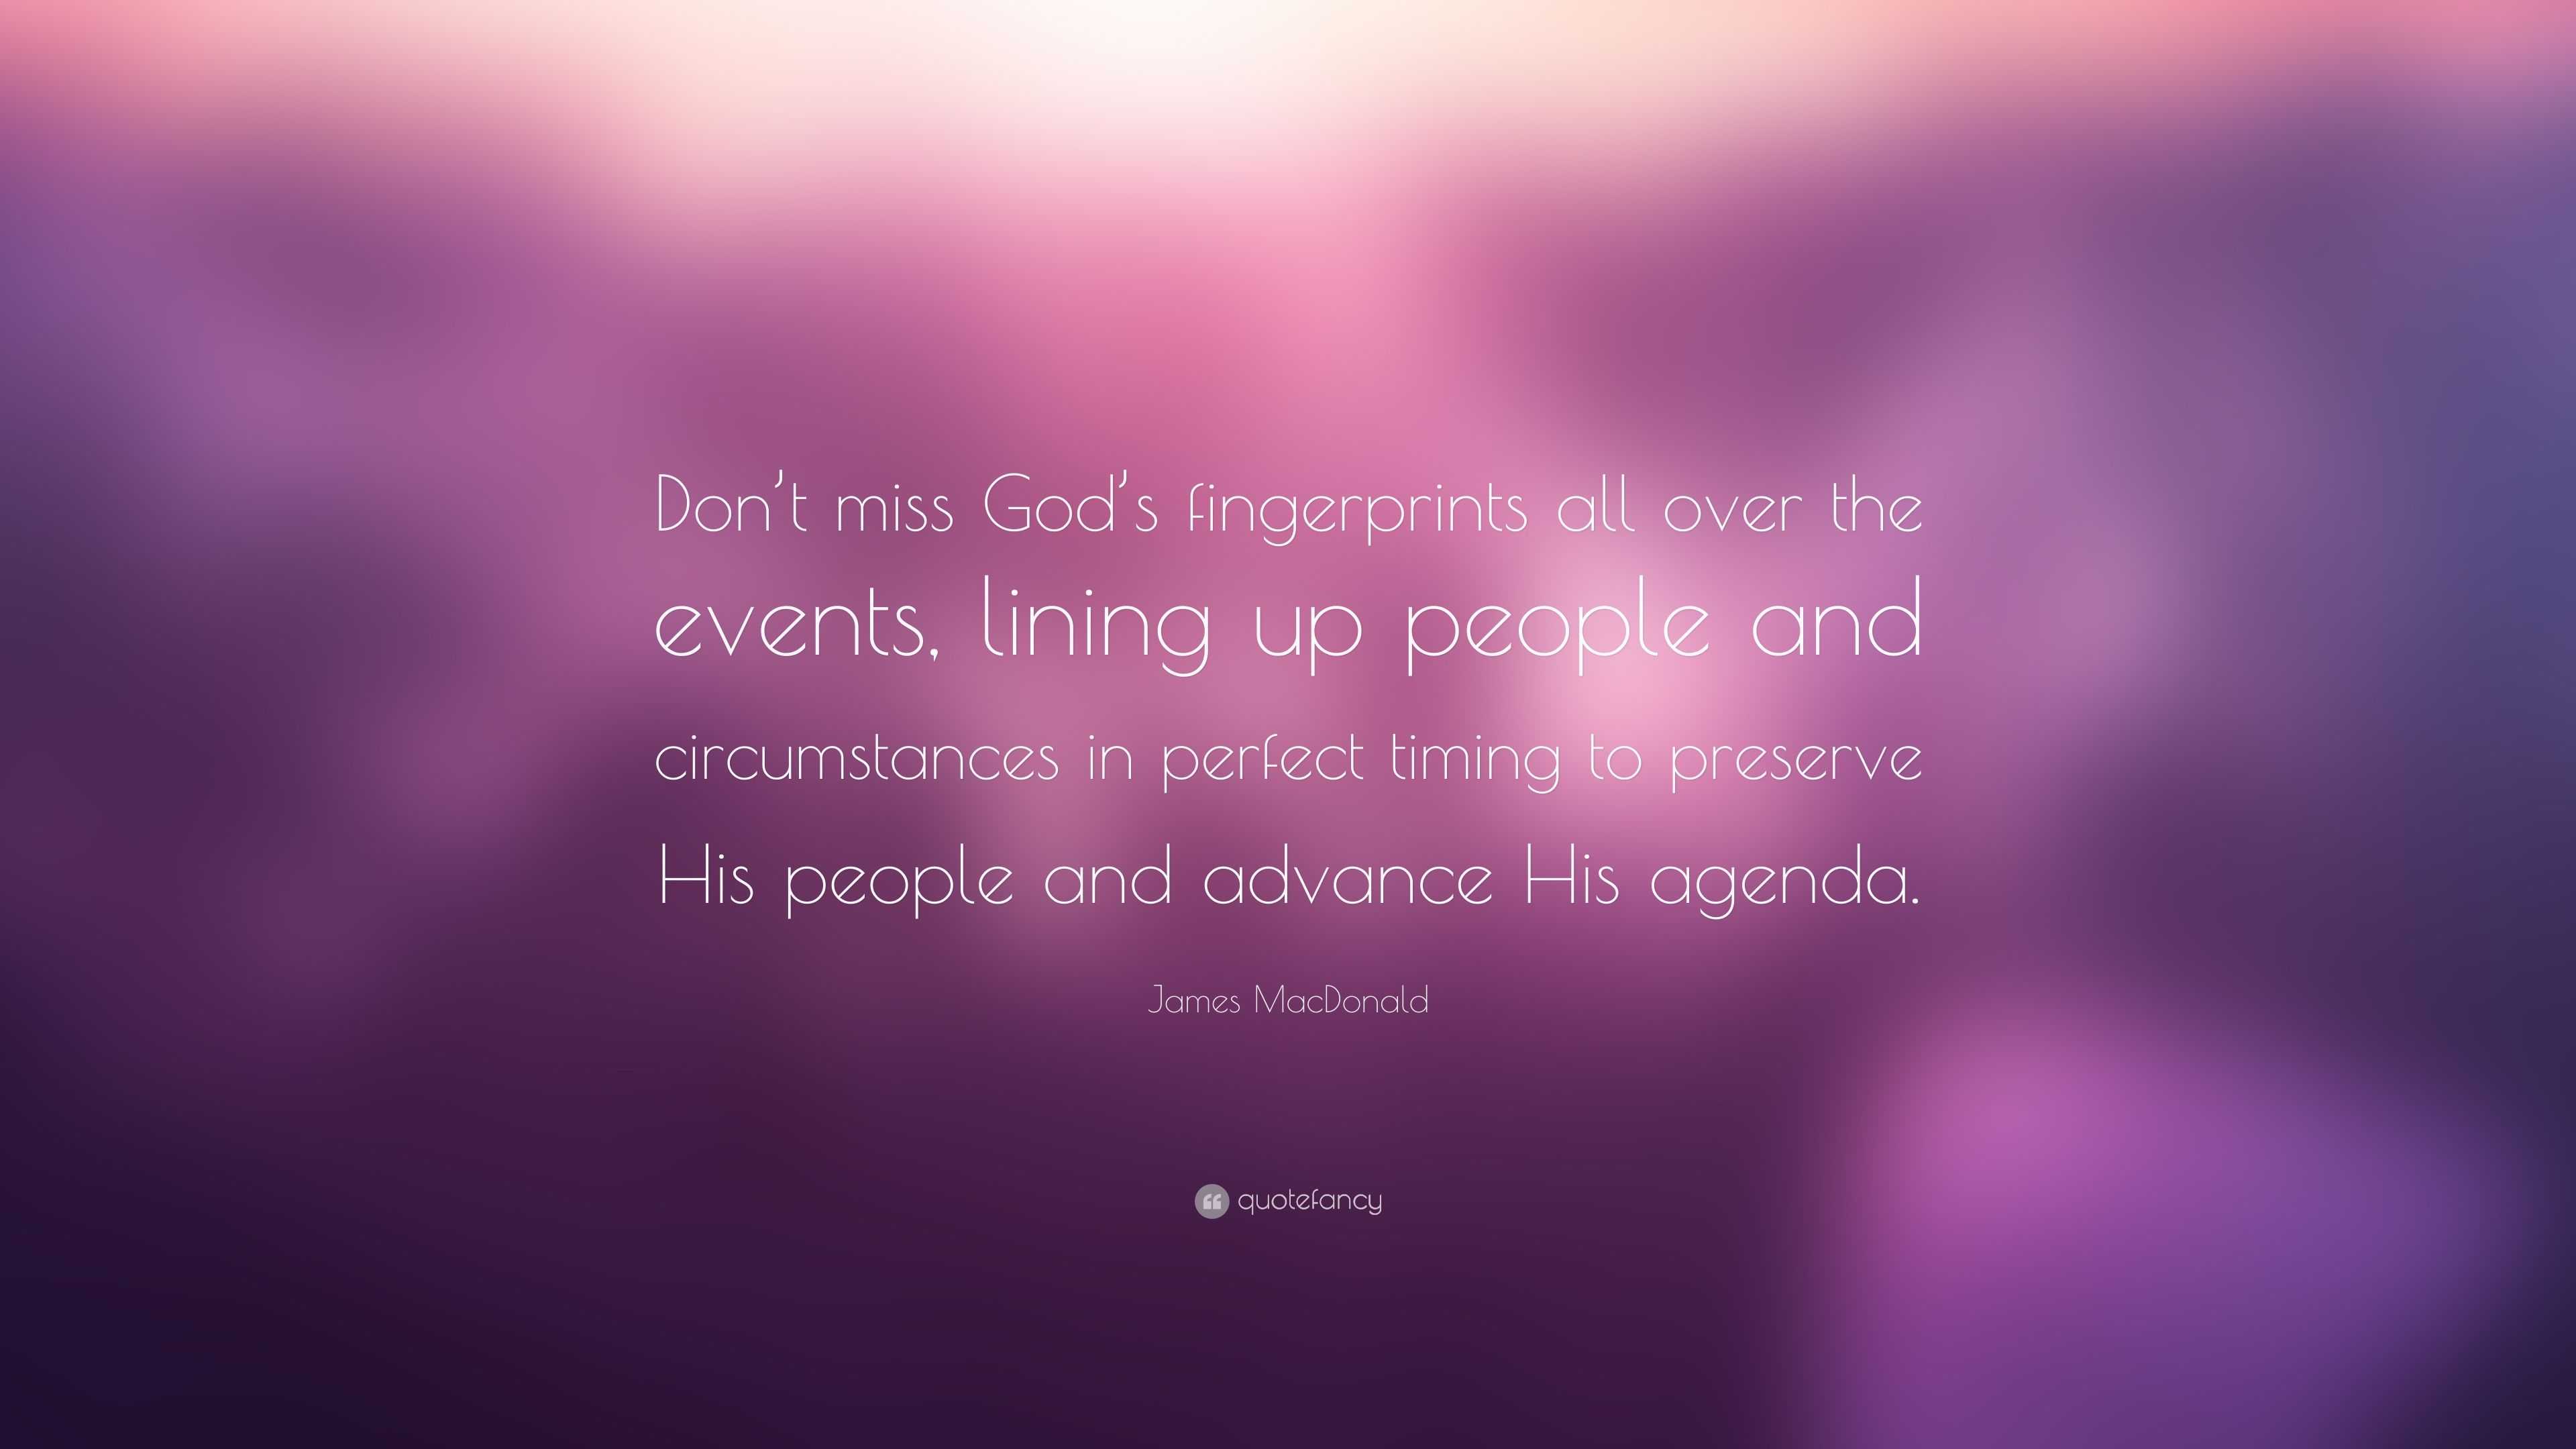 James MacDonald Quote: “Don’t miss God’s fingerprints all over the ...